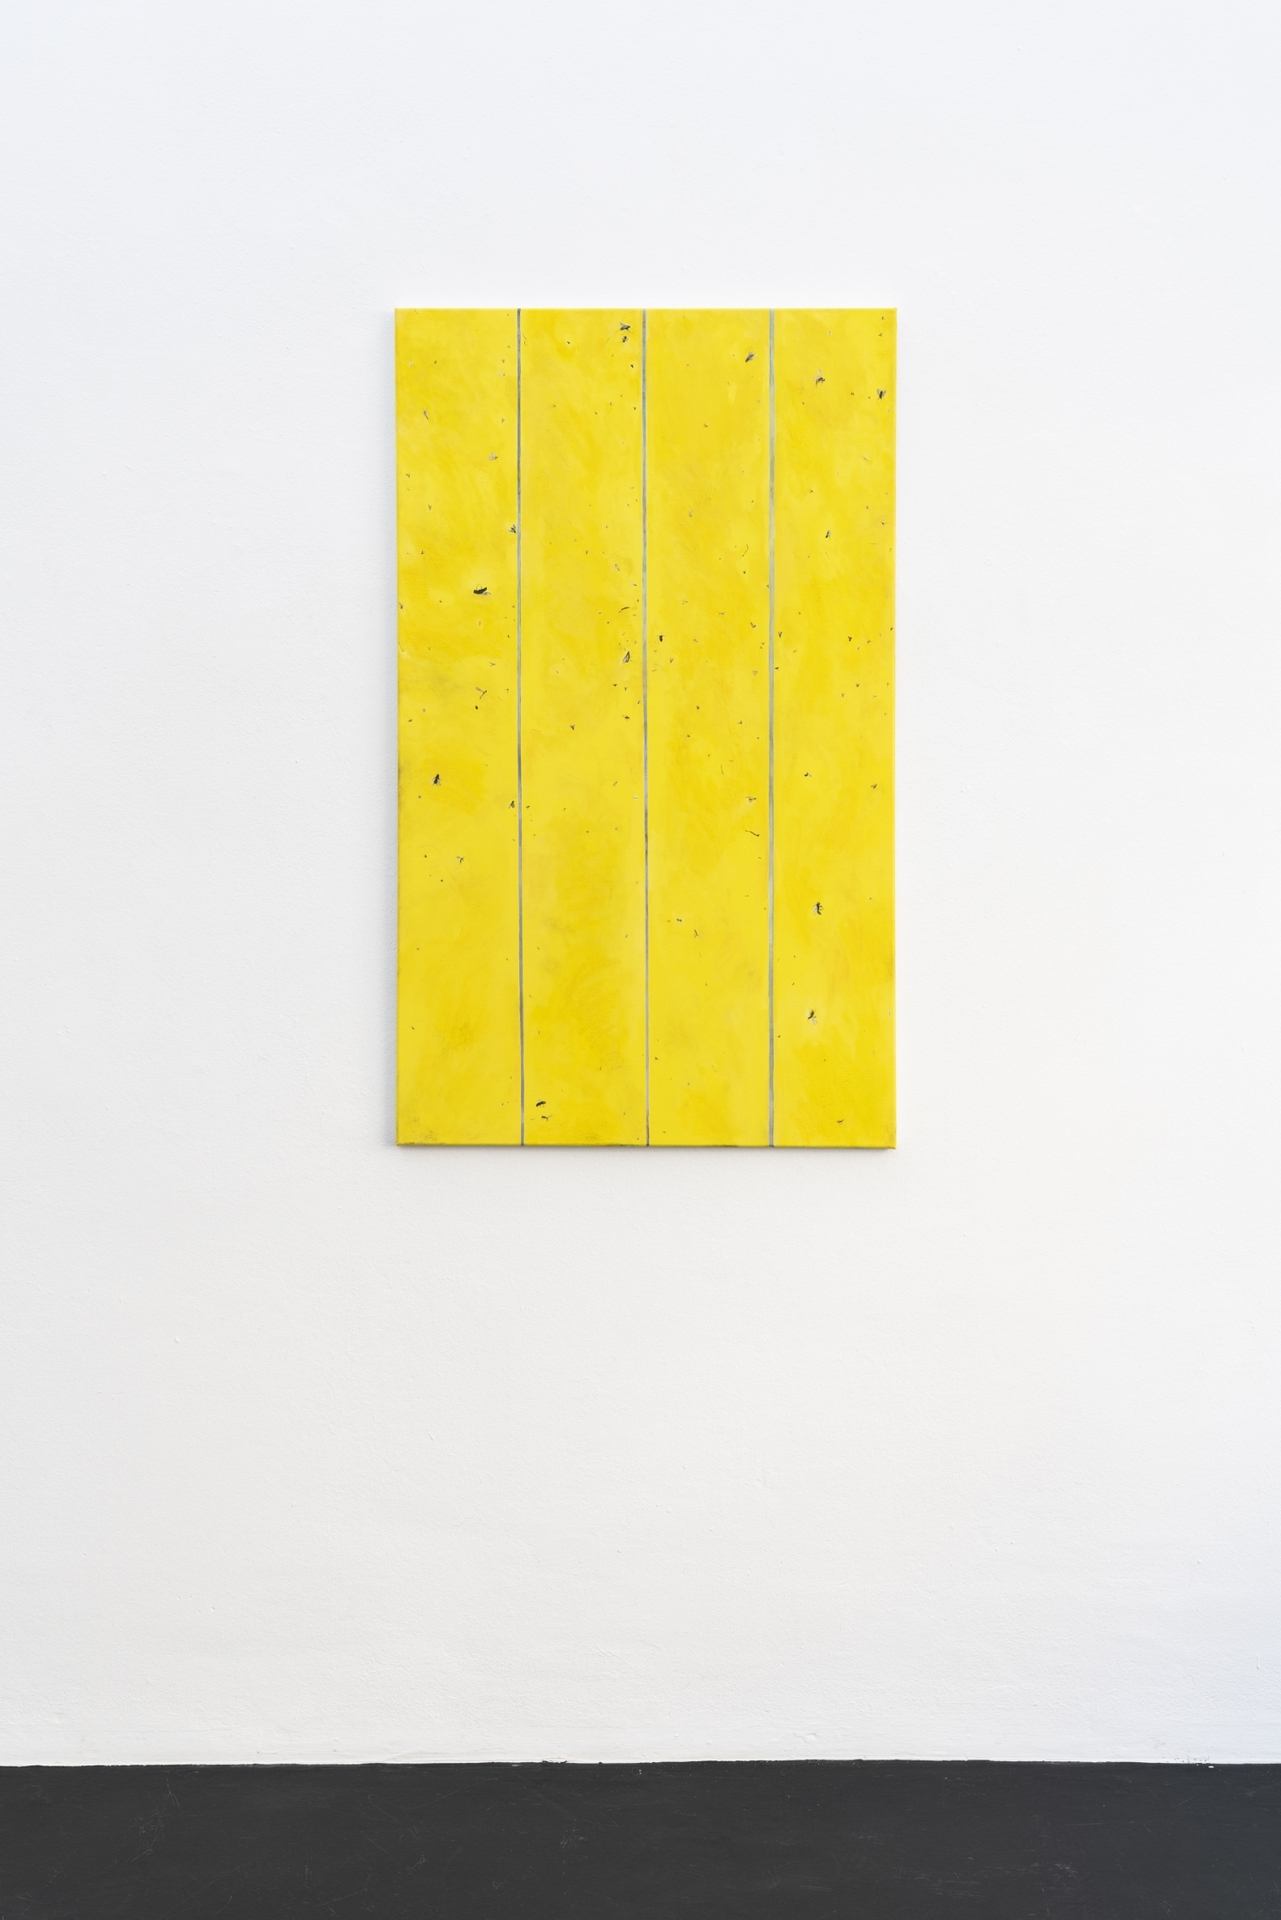 Bradley Davies, "Buzzkill 01", oil on linen, 70 x 120 cm, 2020